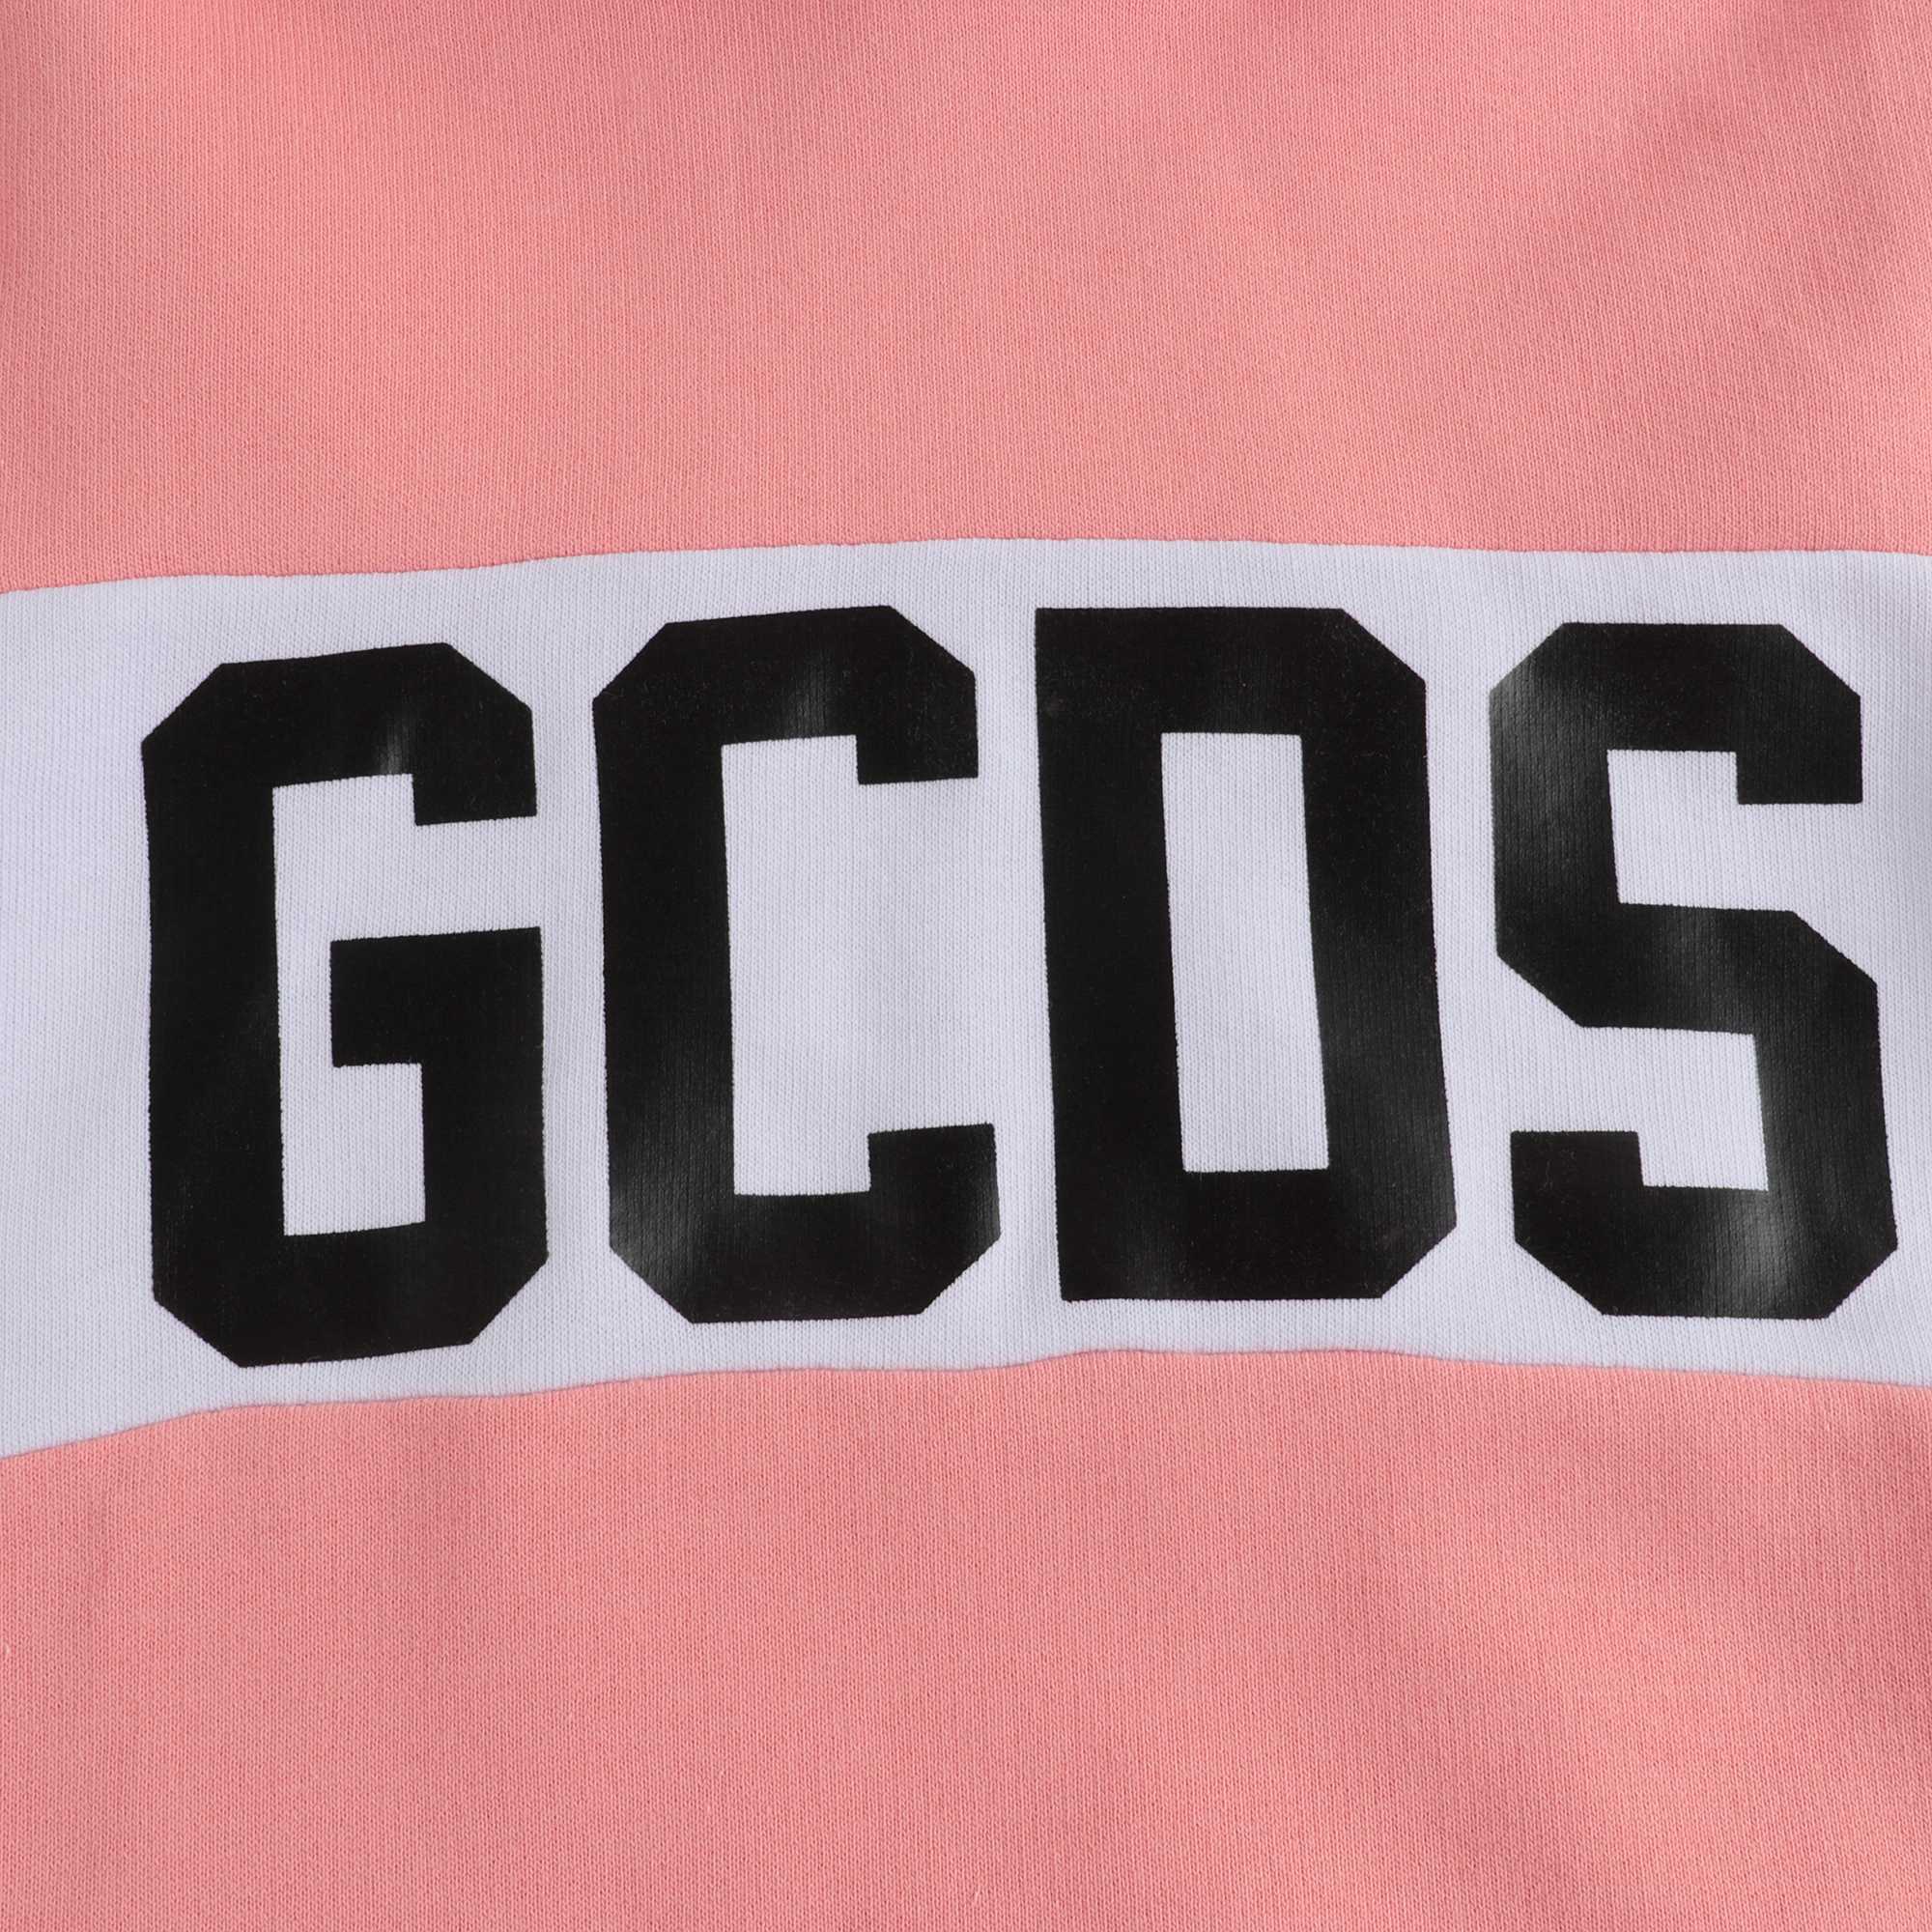 Boys & Girls Pink Logo Hooded Sweatshirt